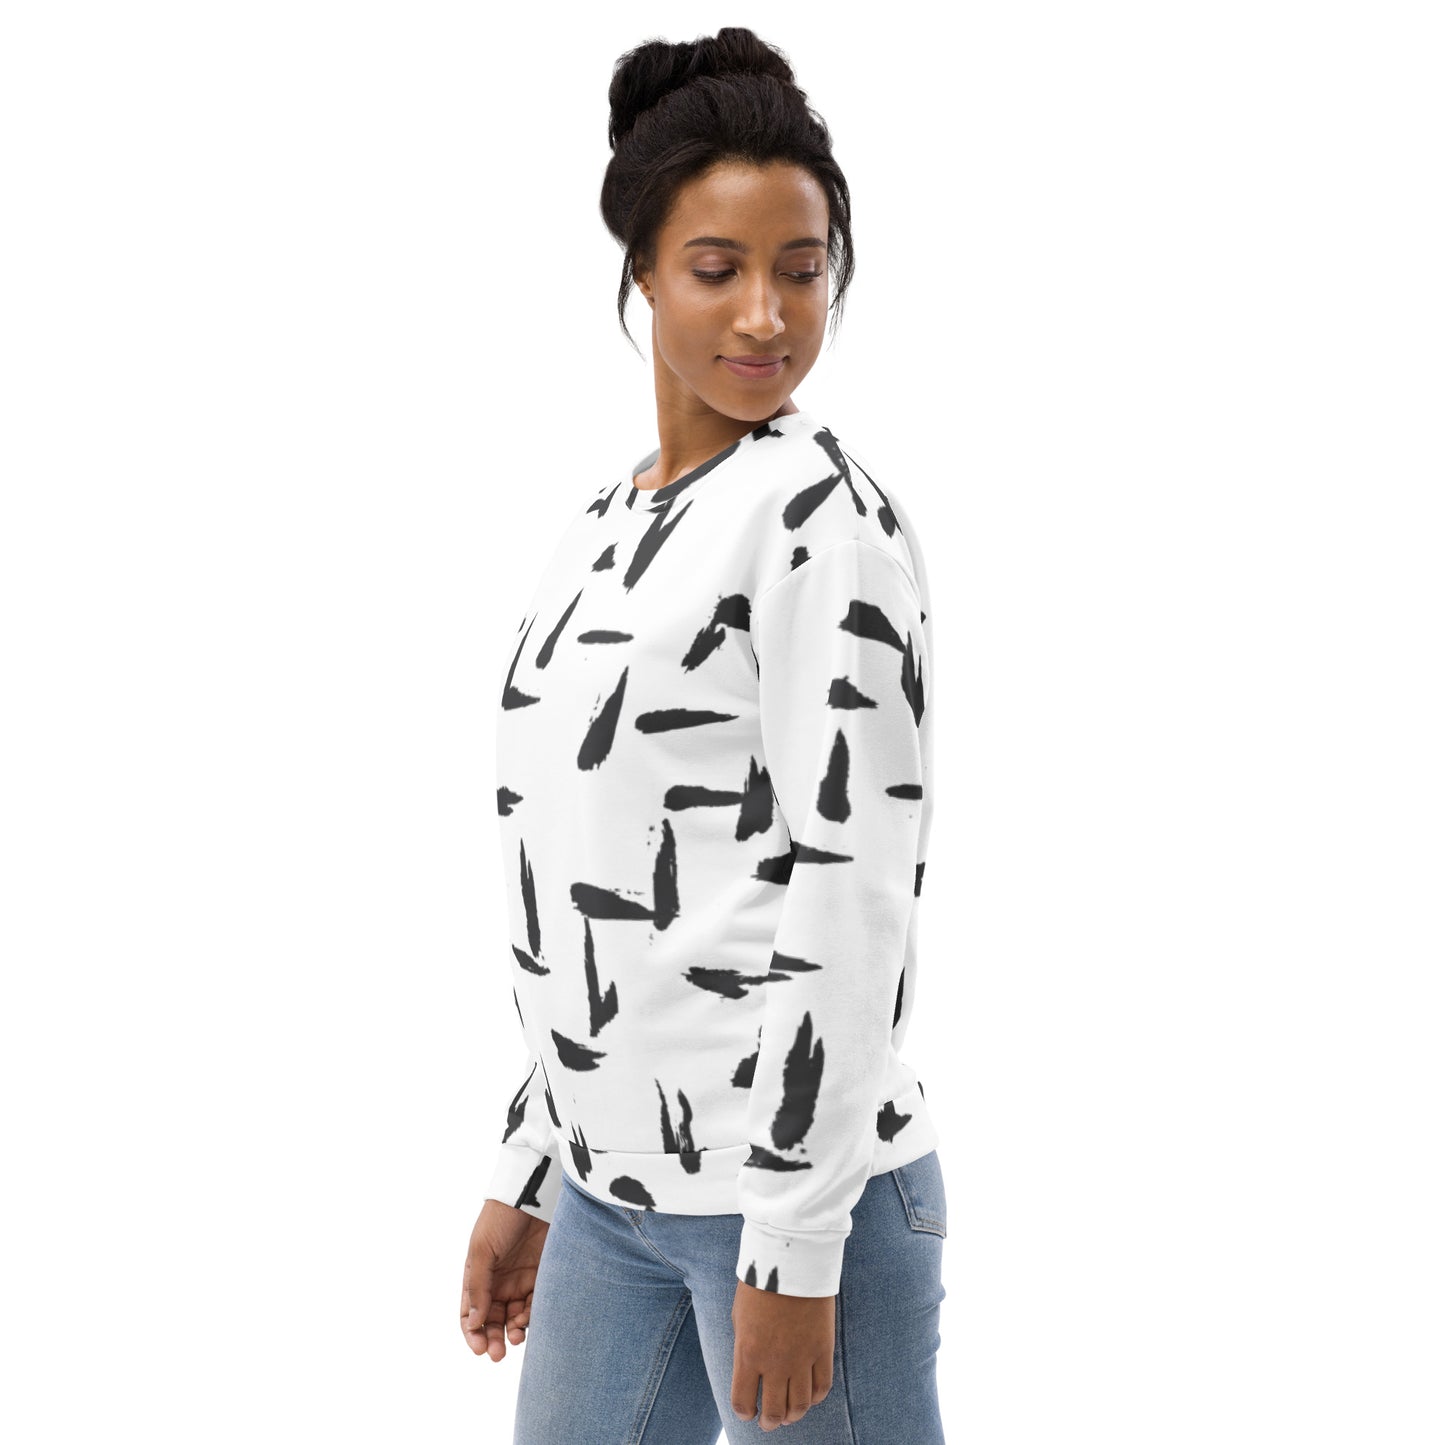 Black and White Abstract Print Sweatshirt - Women